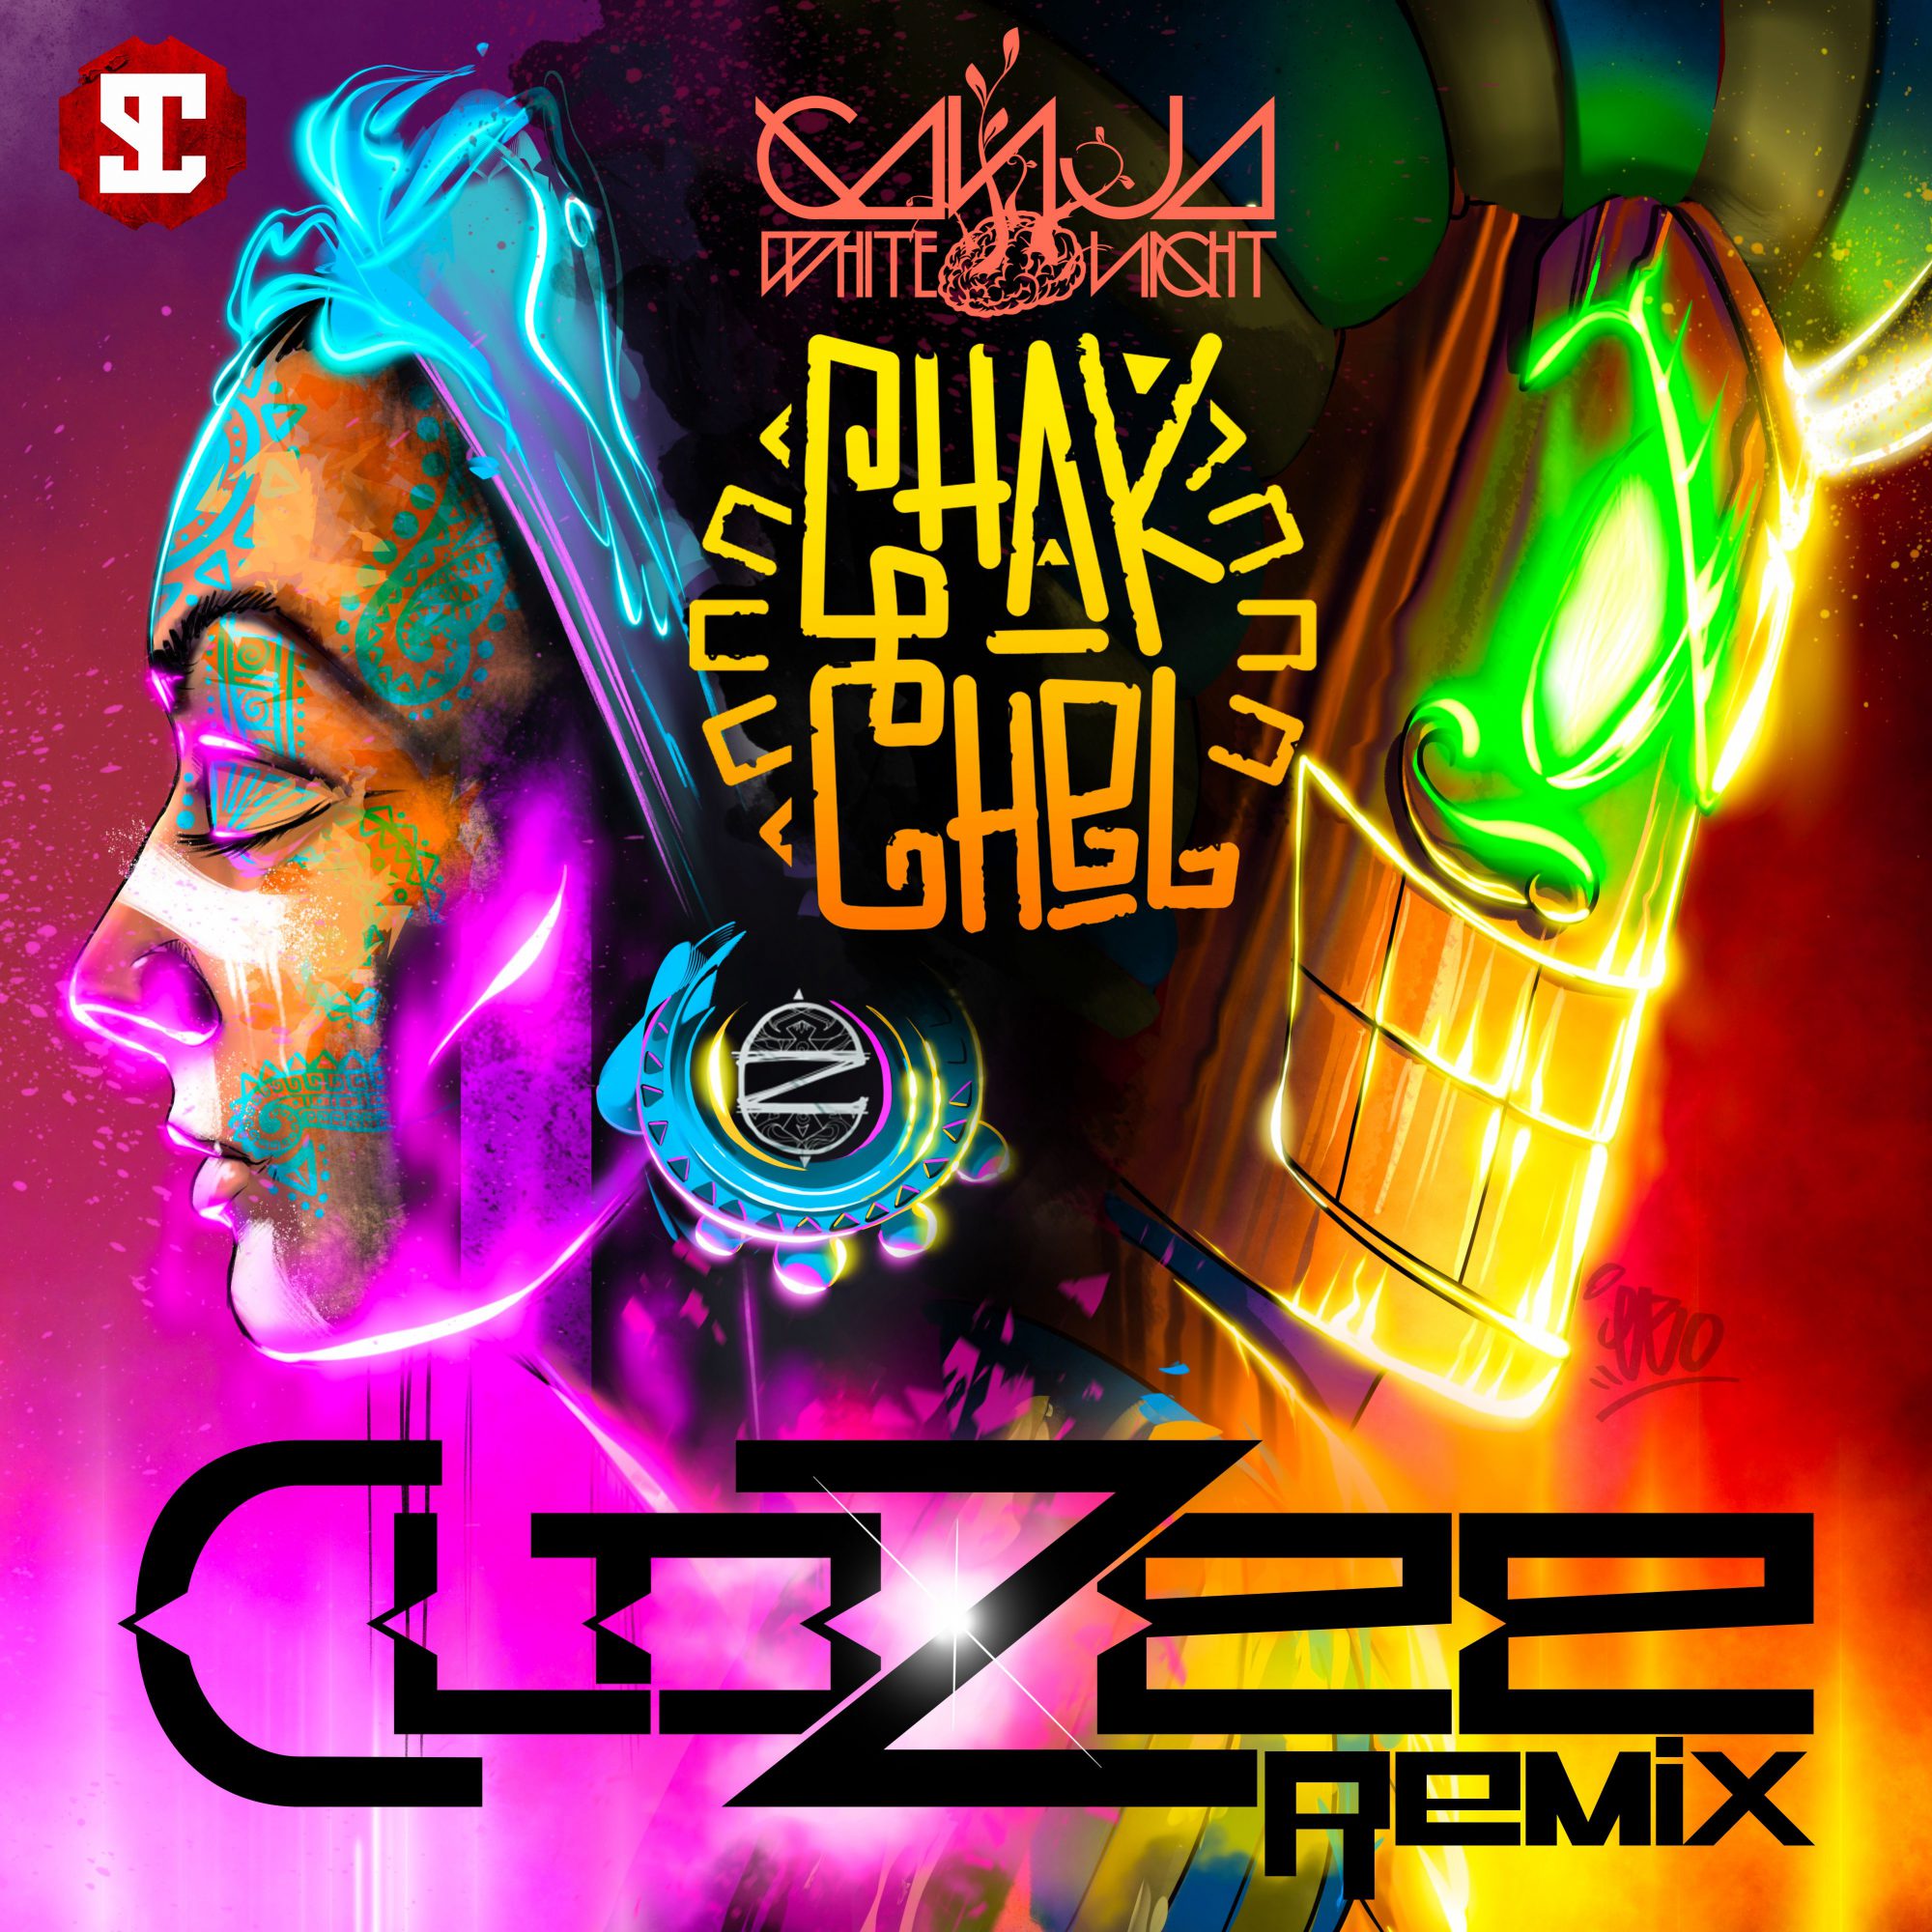 Ganja White Night Chak Chel (CloZee Remix)